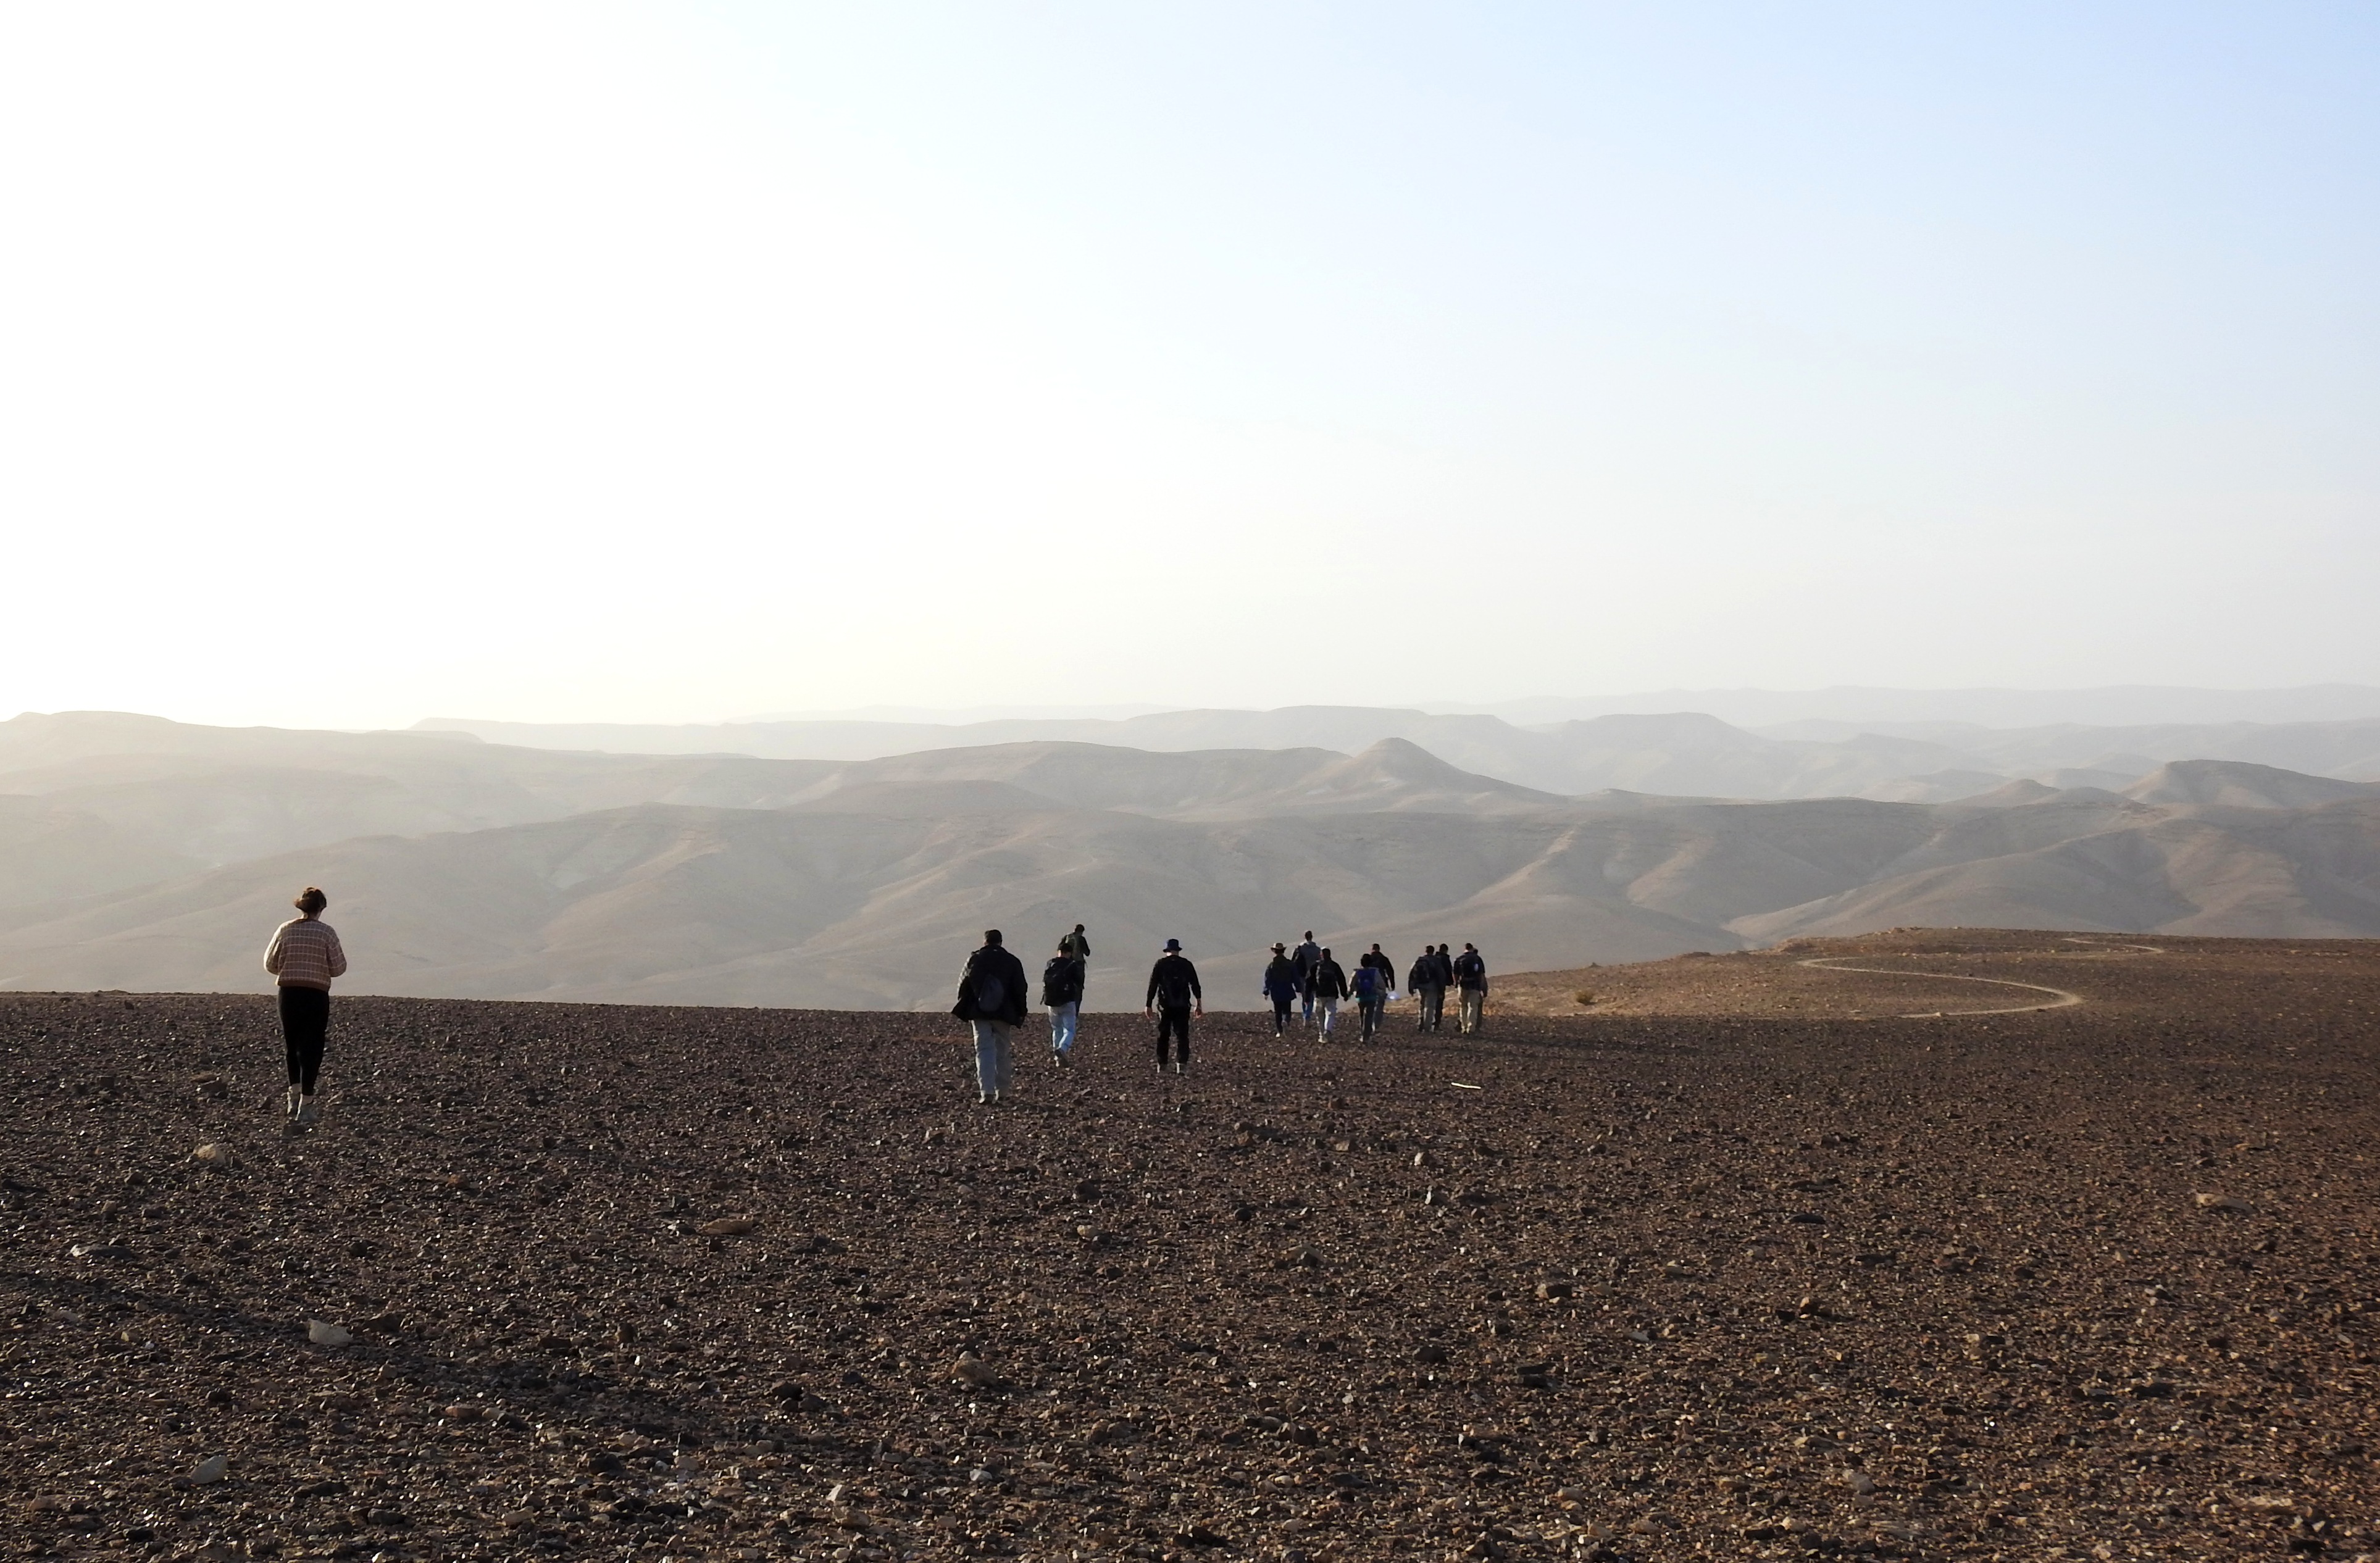 Walking the plateau towards Givat Gorni